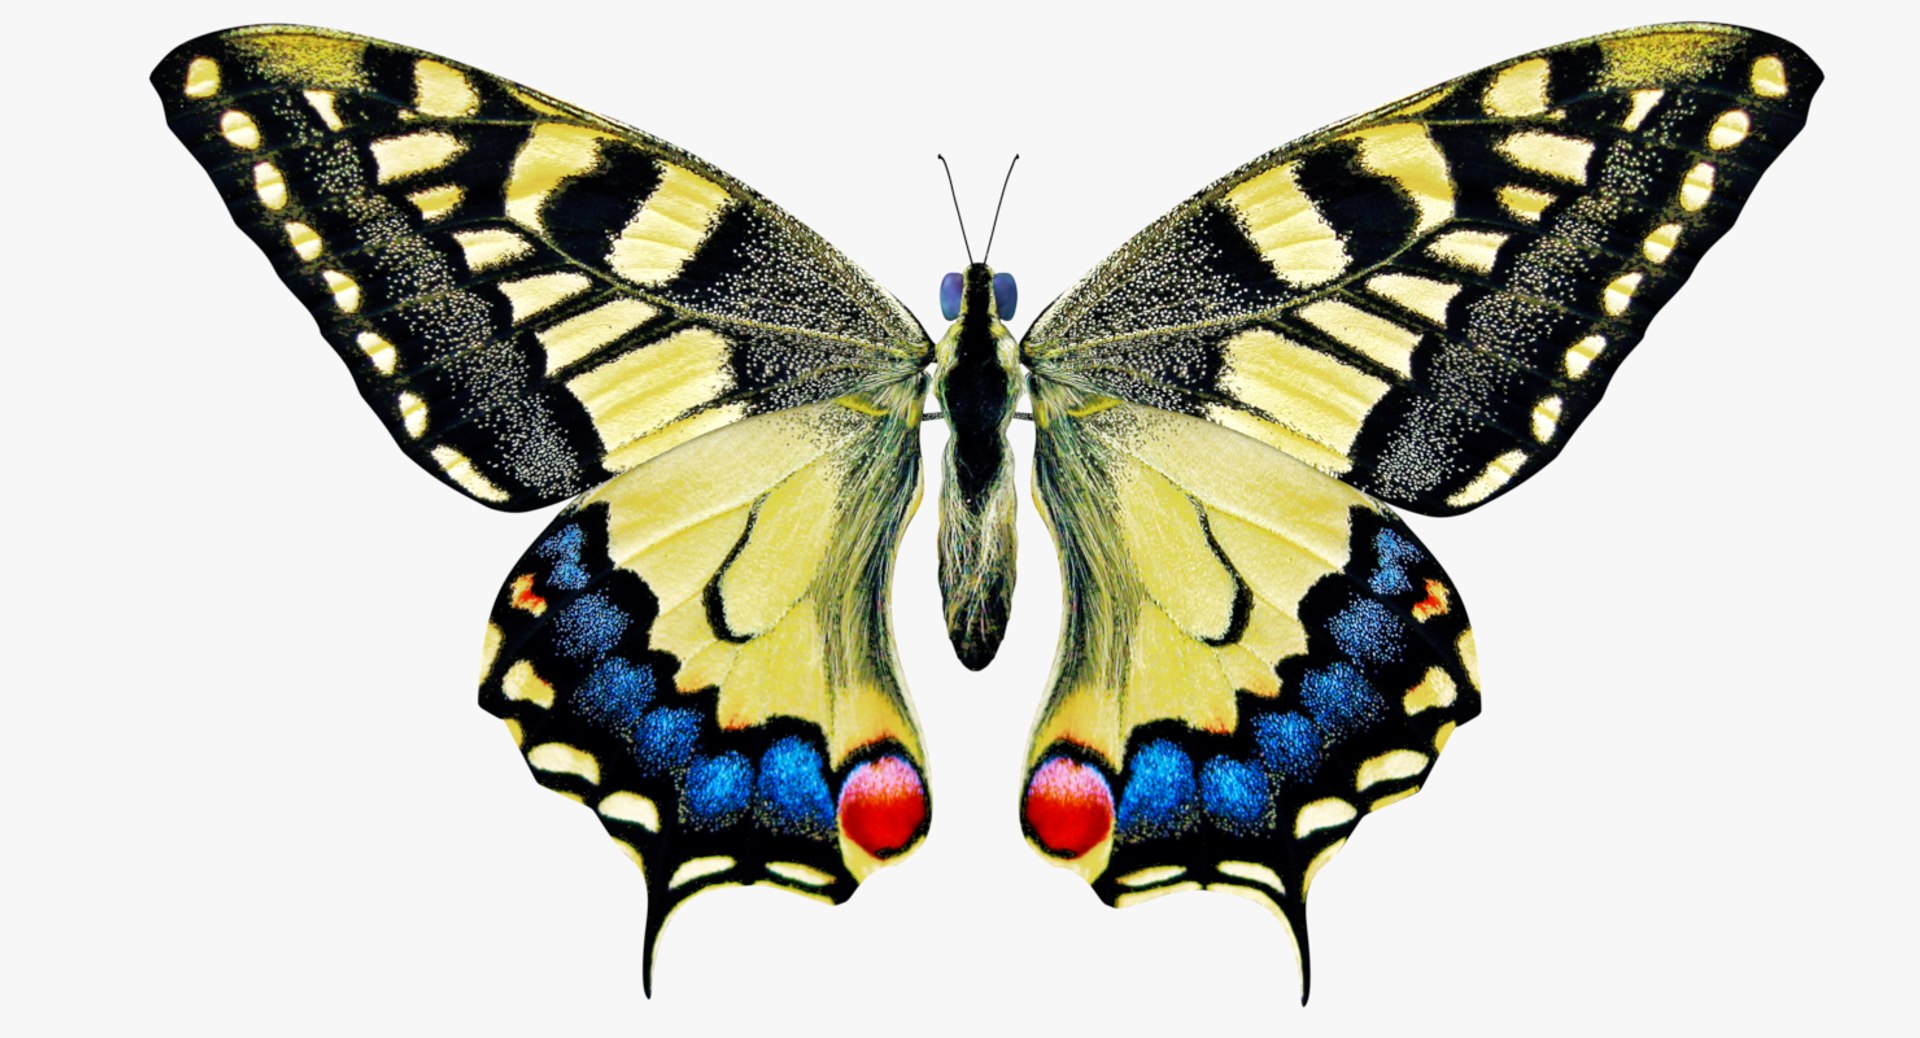 3D model papilio machaon butterfly https://p.turbosquid.com/ts-thumb/i0/puLjj2/DA4ck985/000/png/1530051685/1920x1080/fit_q87/ae9d203c389250e0205989e6c52540ce7b6407f5/000.jpg